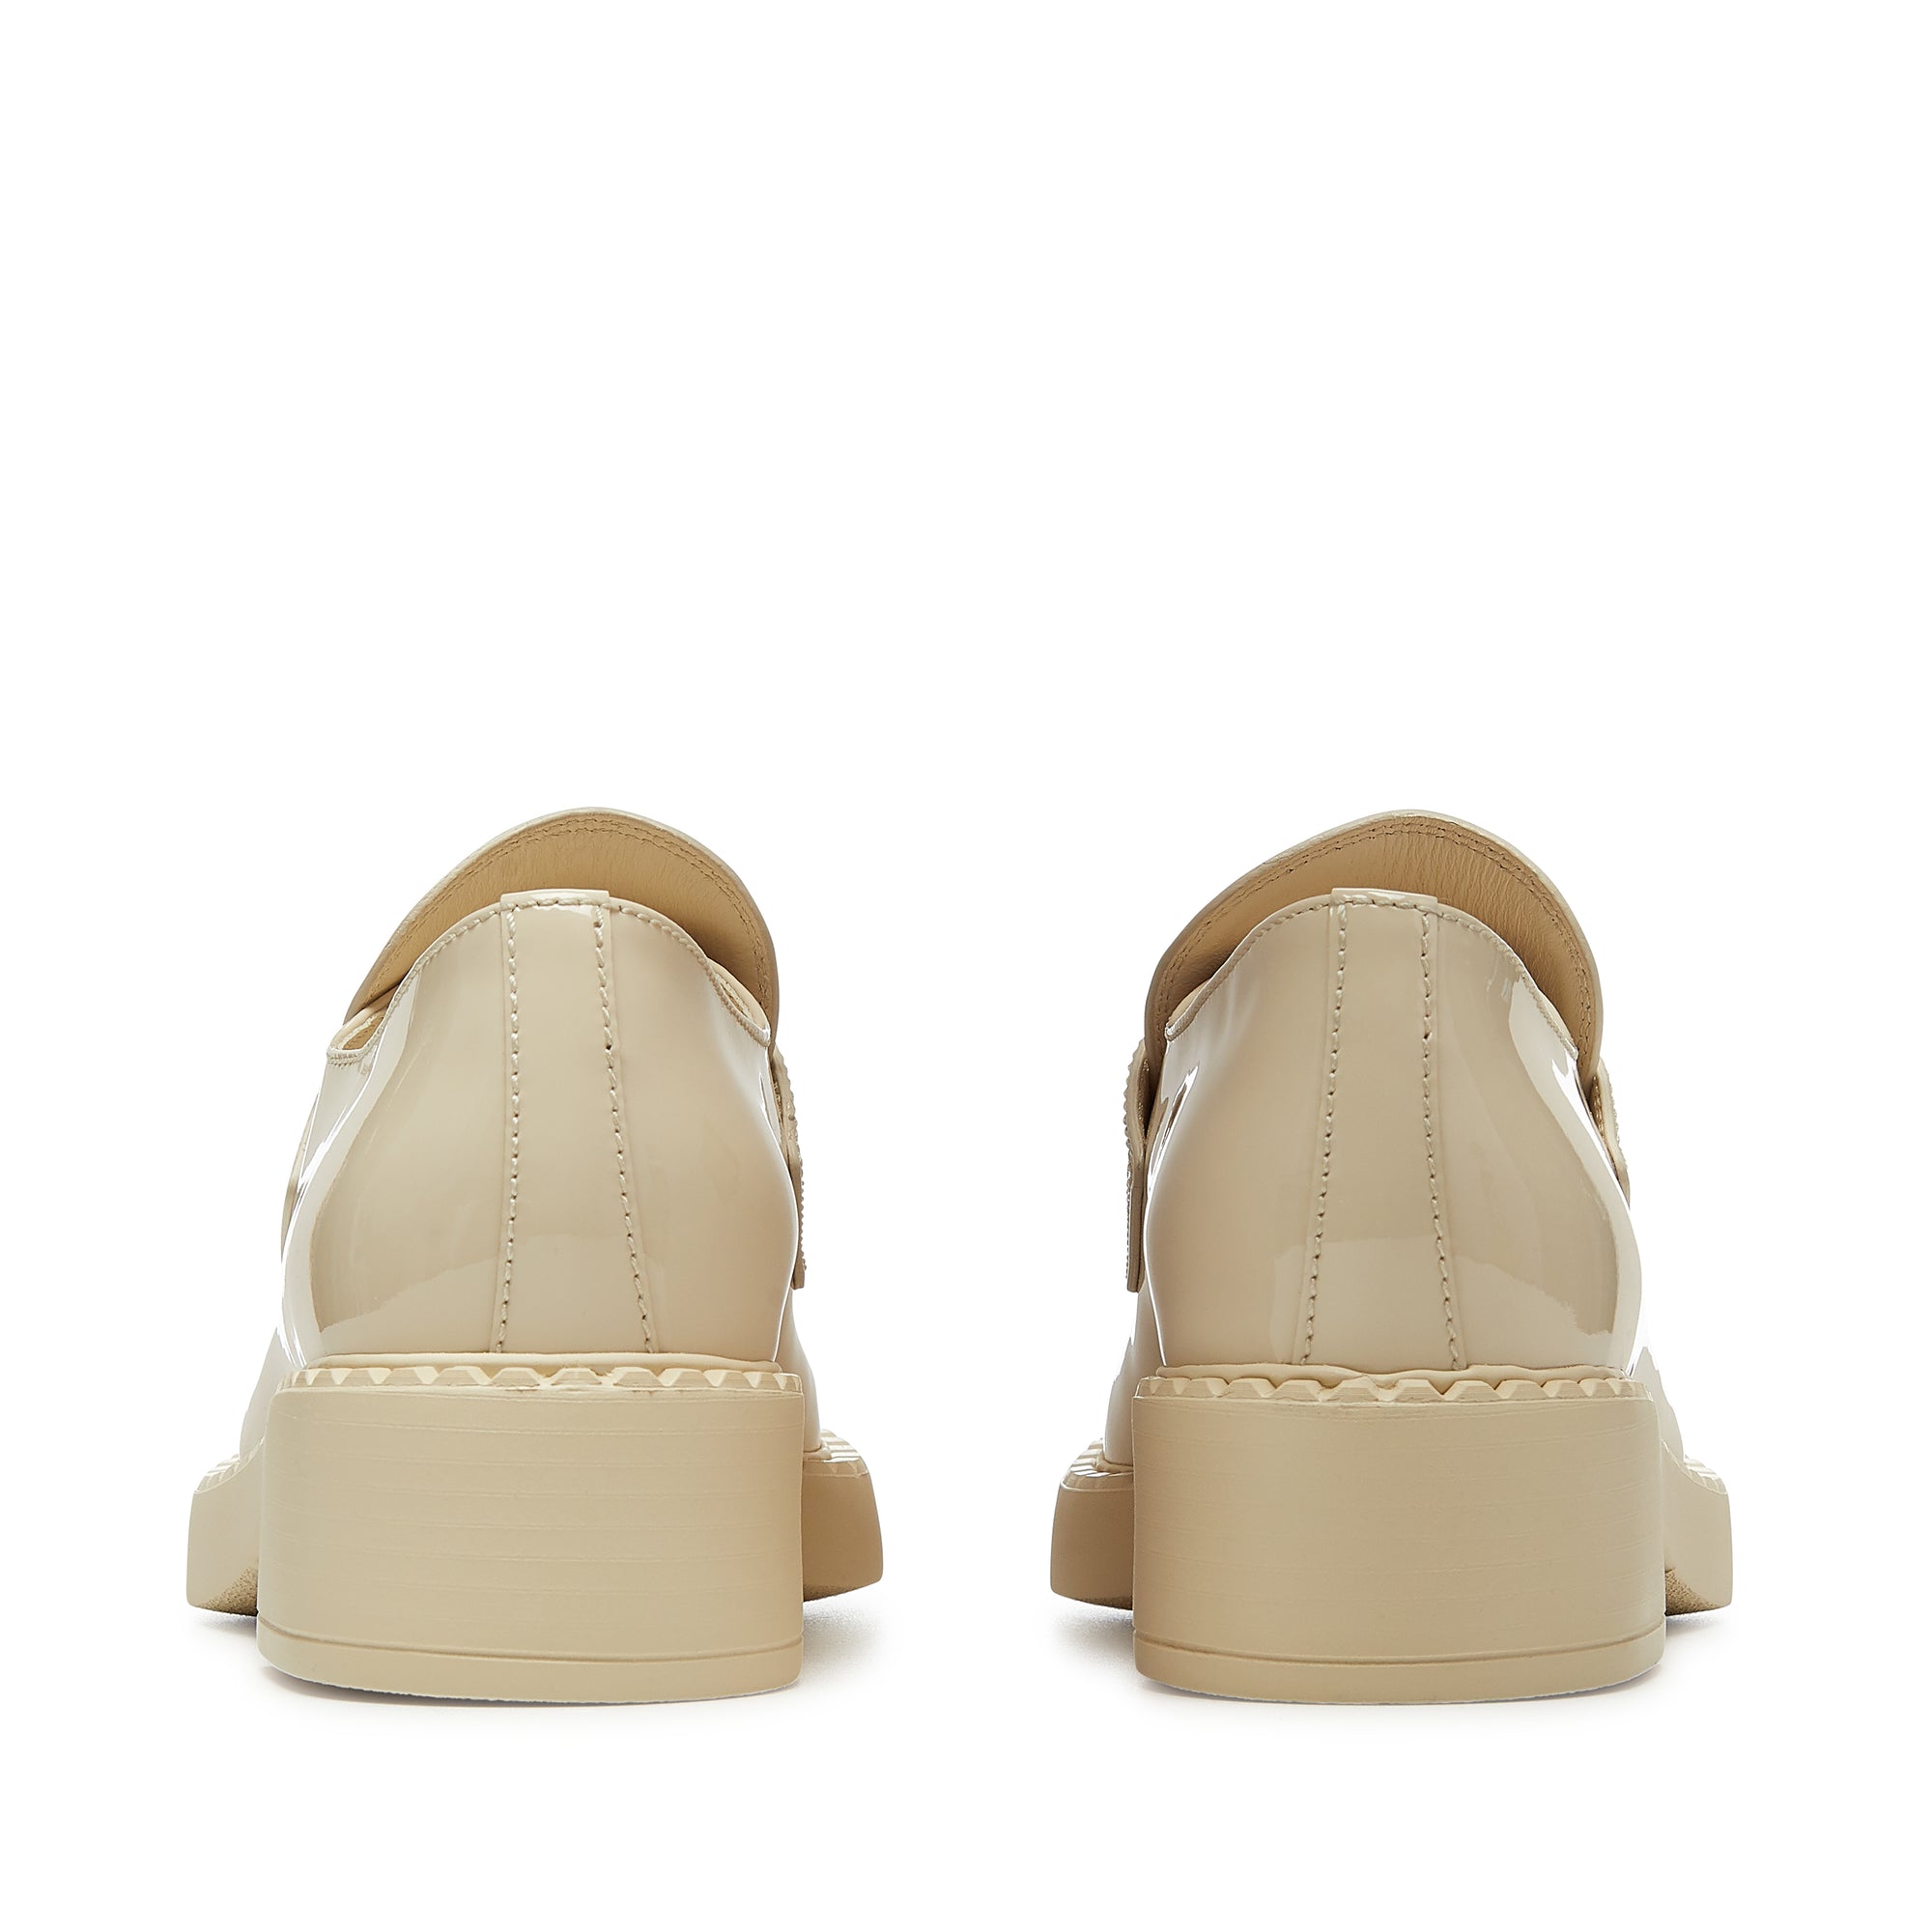 Prada - Women's Loafers - (Ivory) view 4